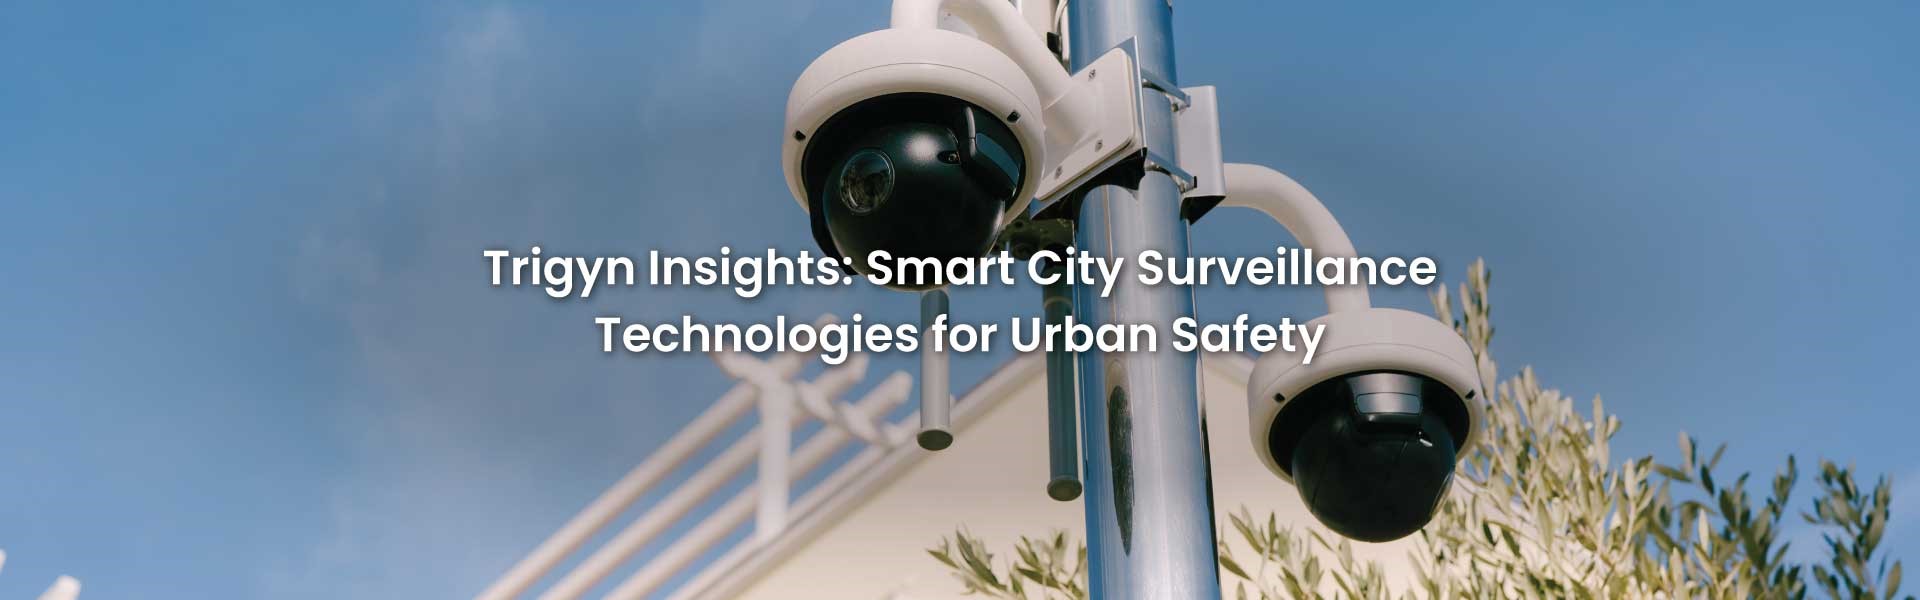 Surveillance Technologies for Urban Safety